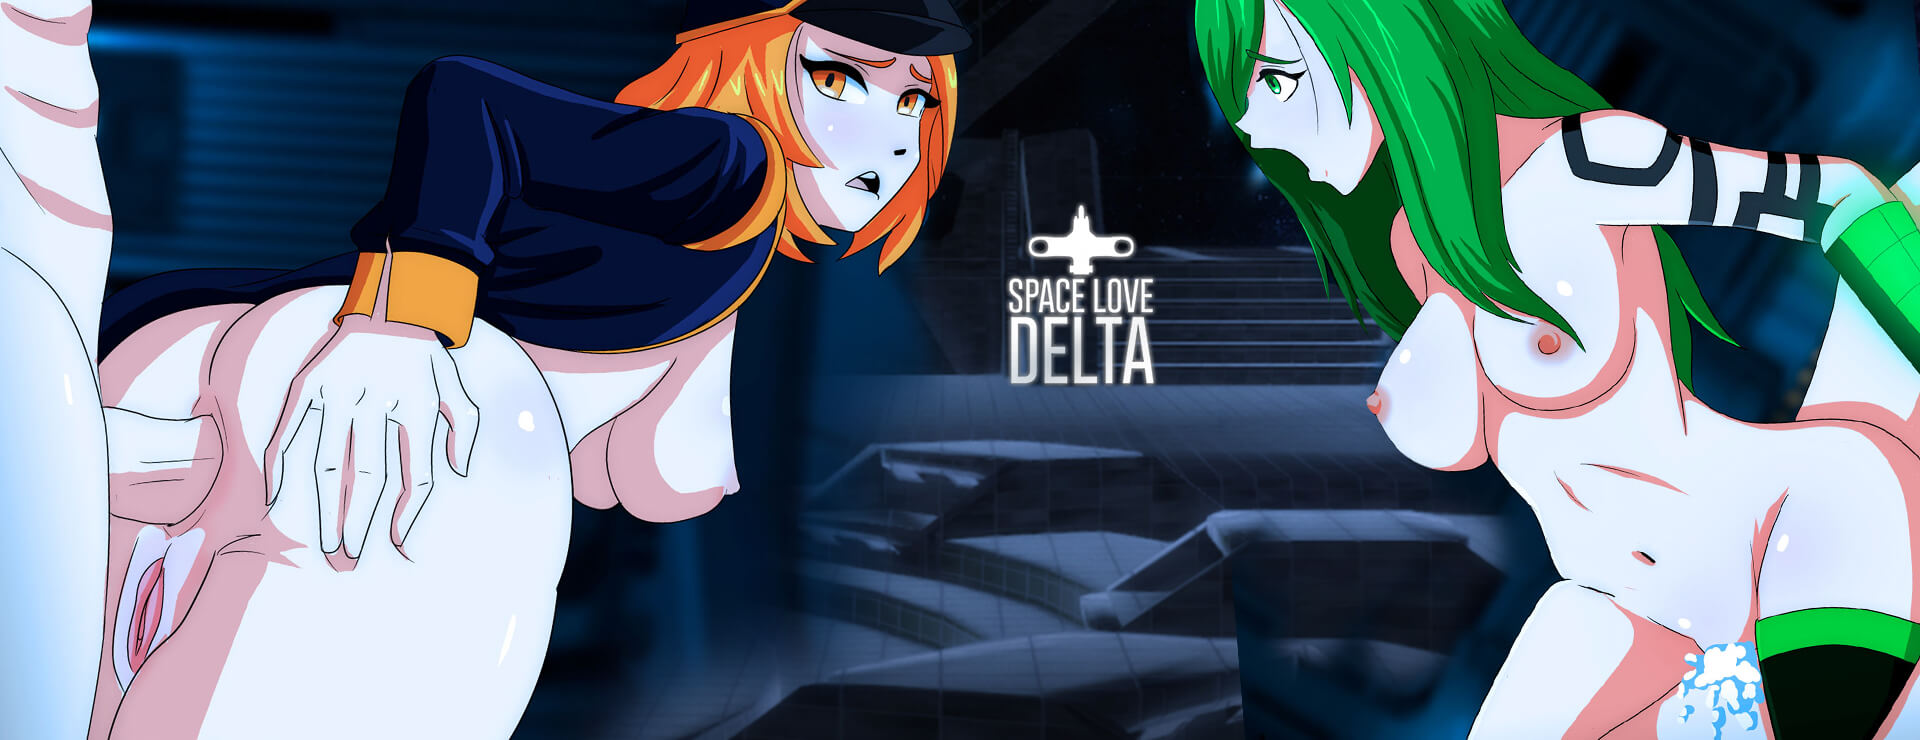 Space Love Delta - Novela Visual Juego